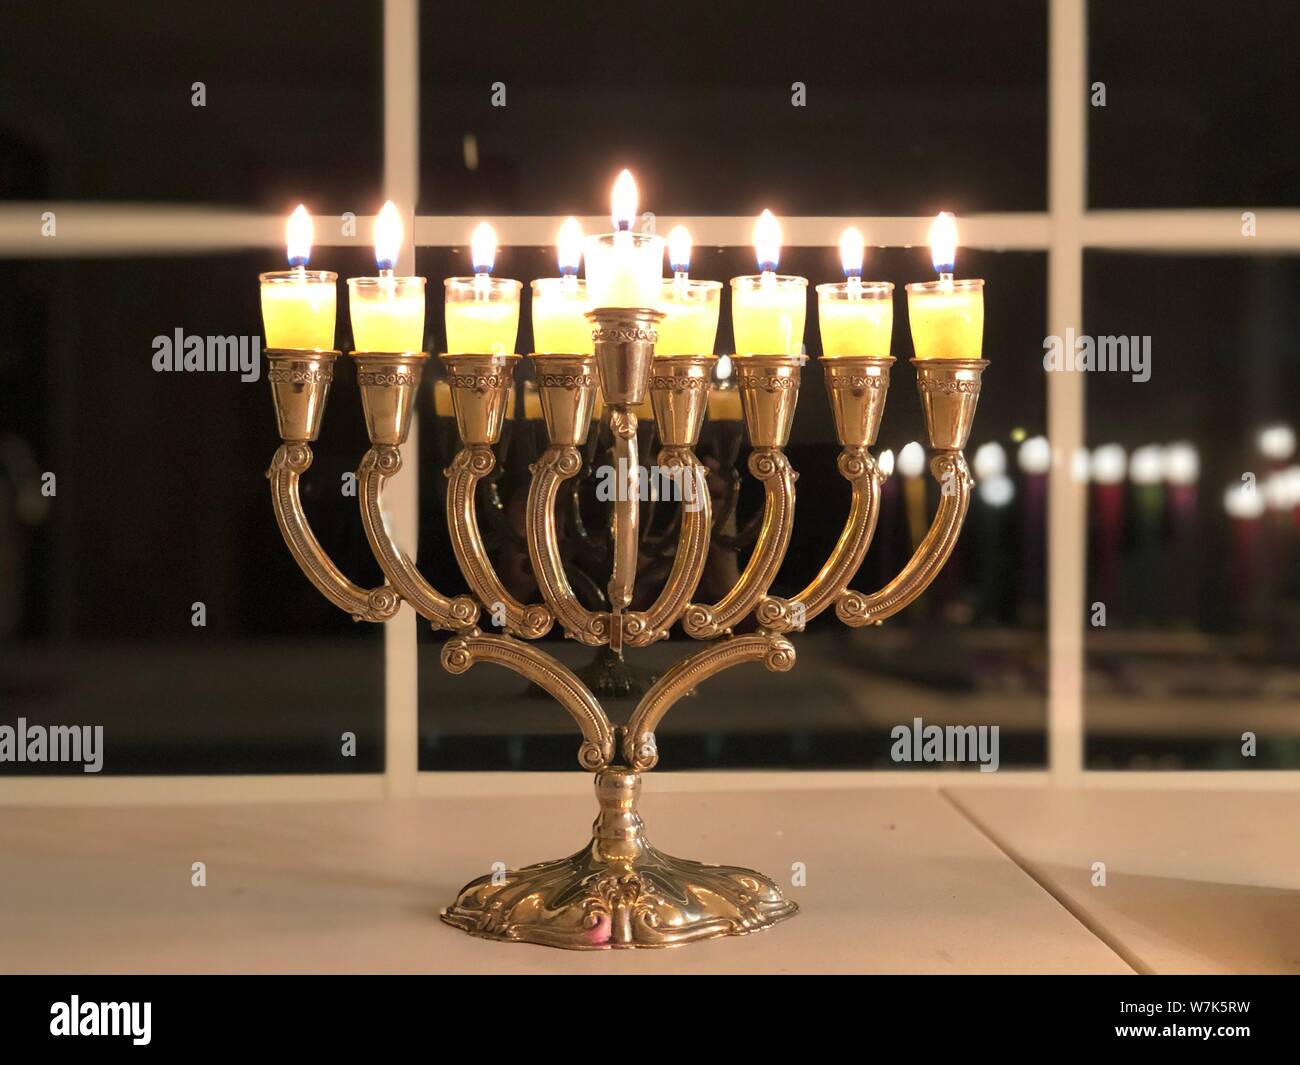 Hanukkah Menorah Candle Lighting Jewish holidays symbol traditional religious lights in the dark Stock Photo